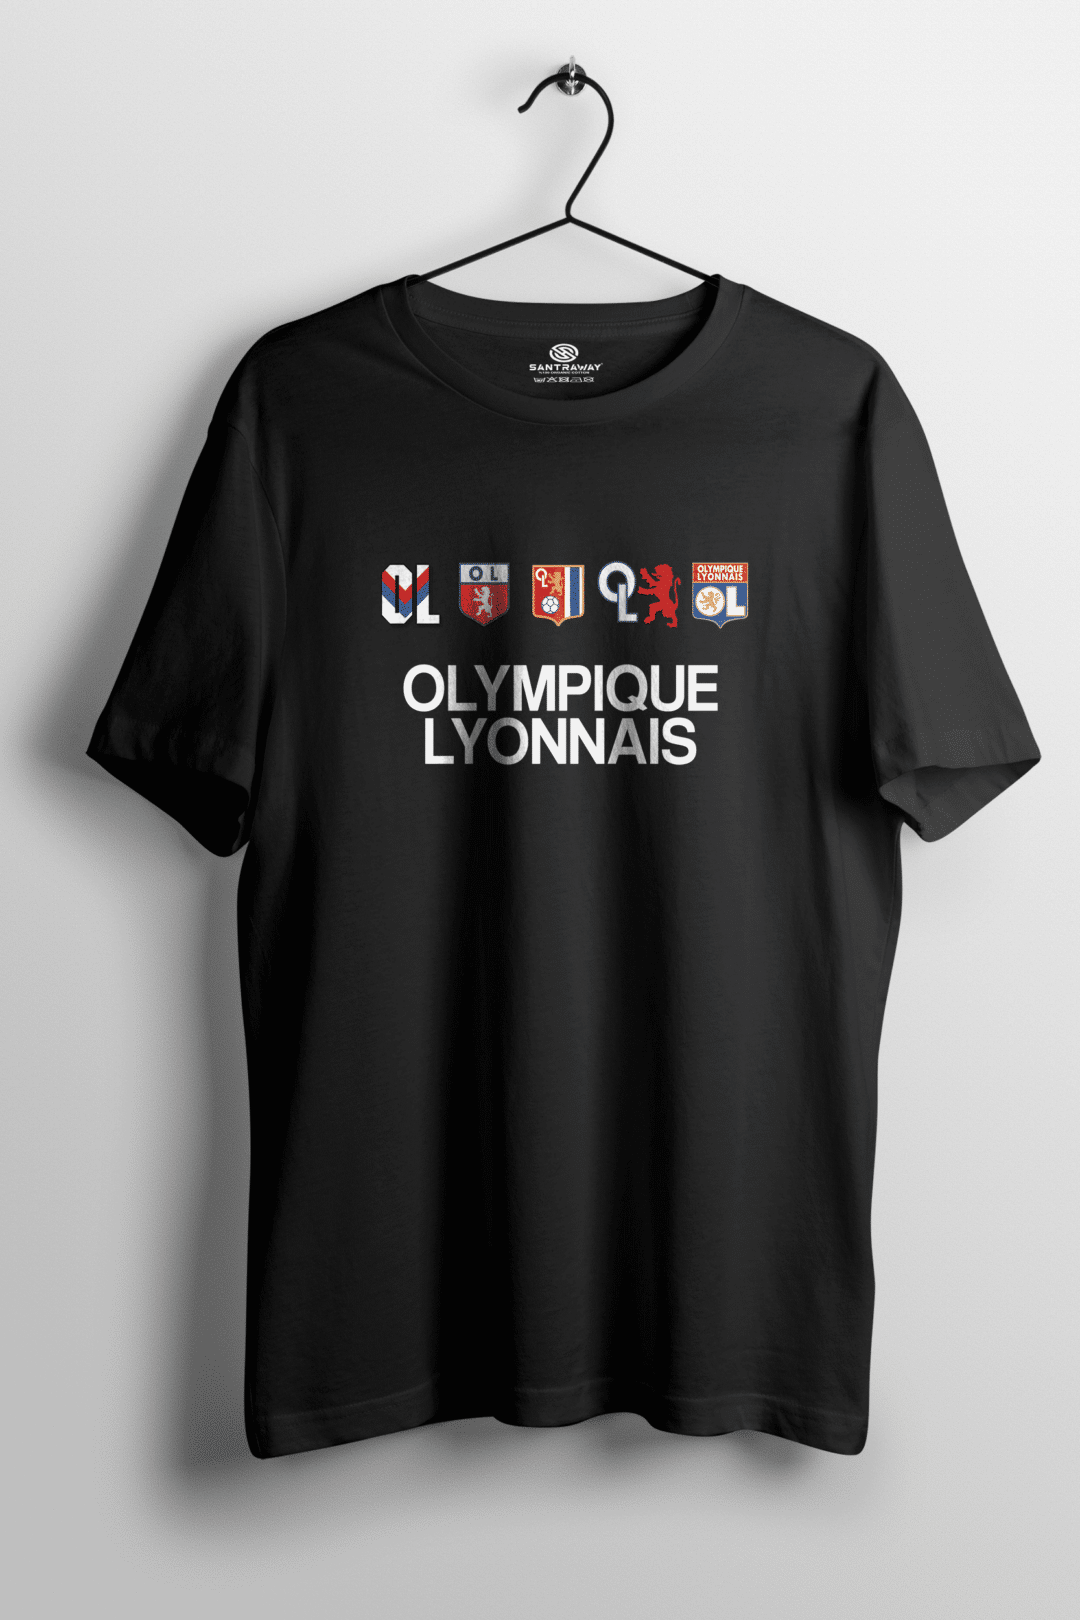 LyonTshirtS